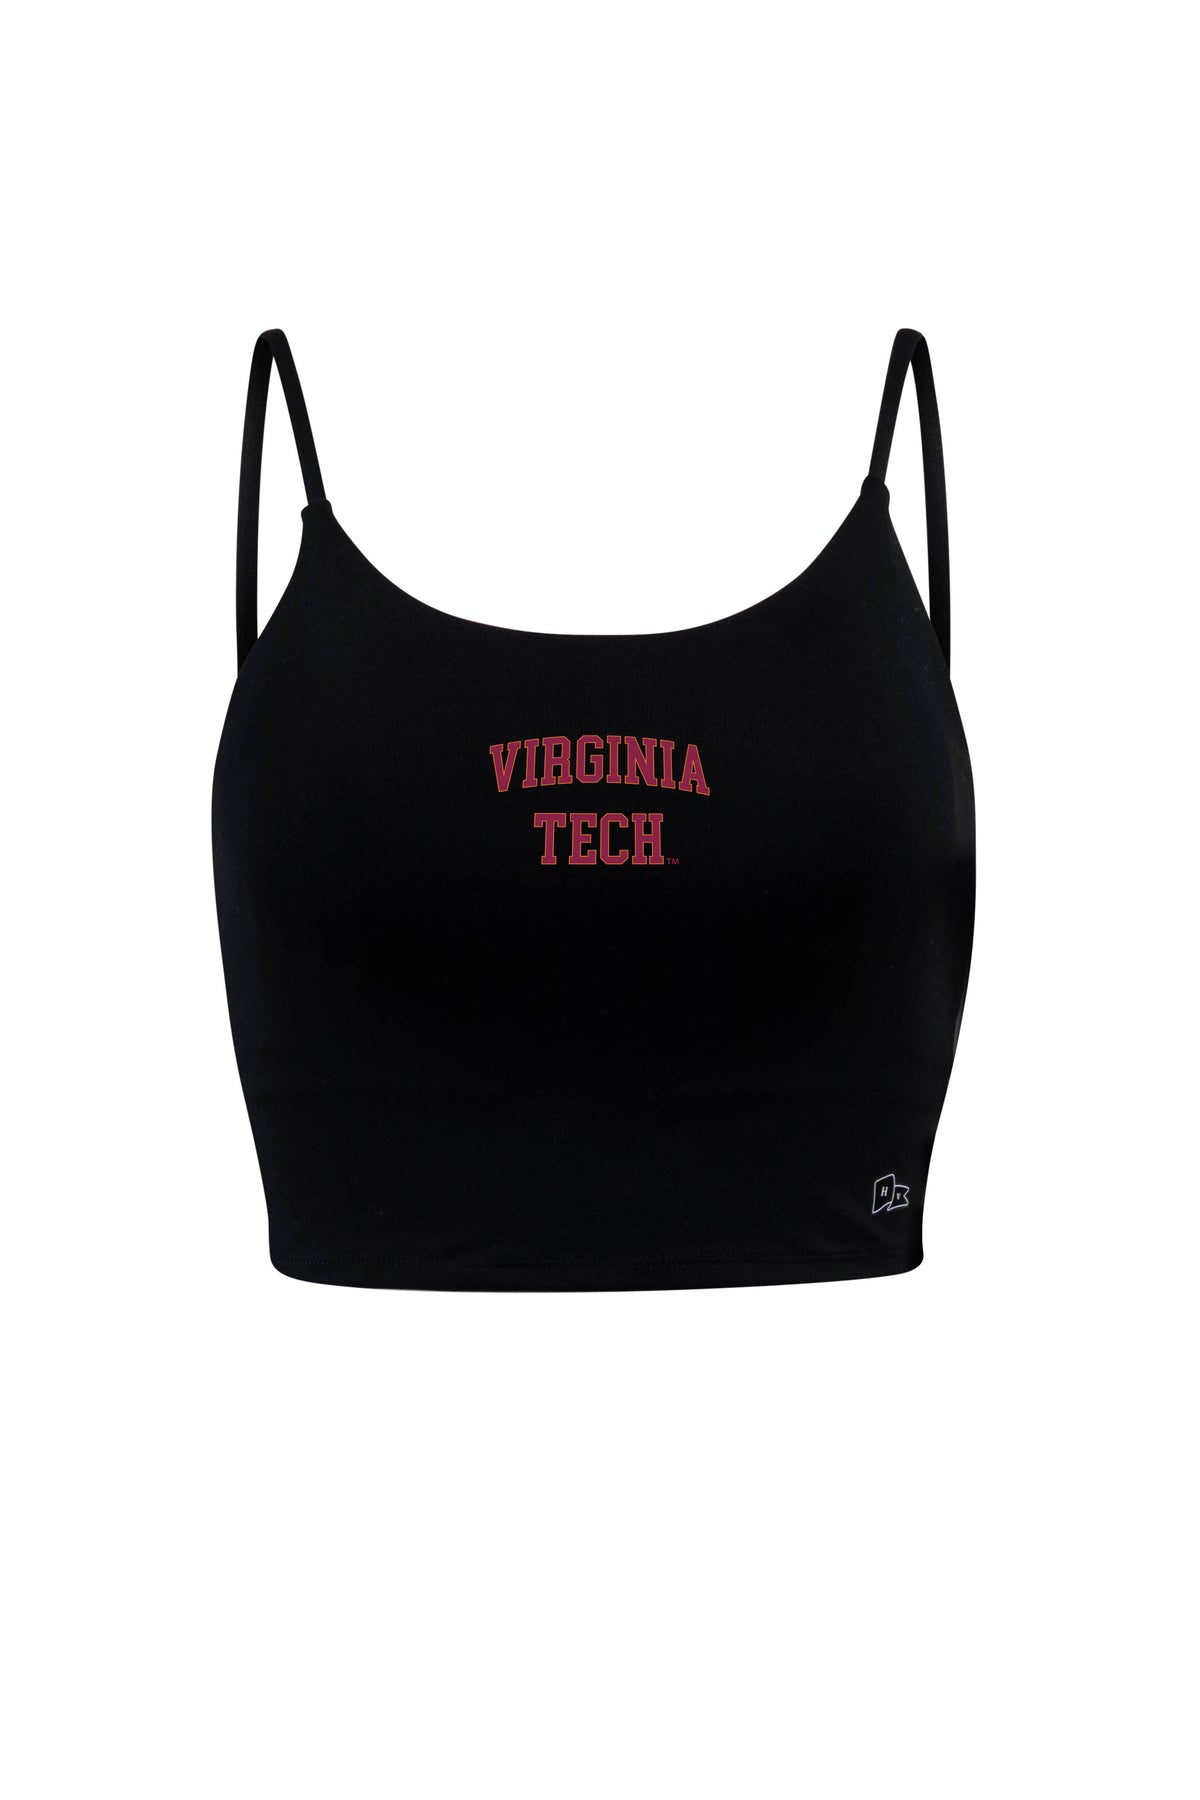 University Virginia Tech Bra Tank Top